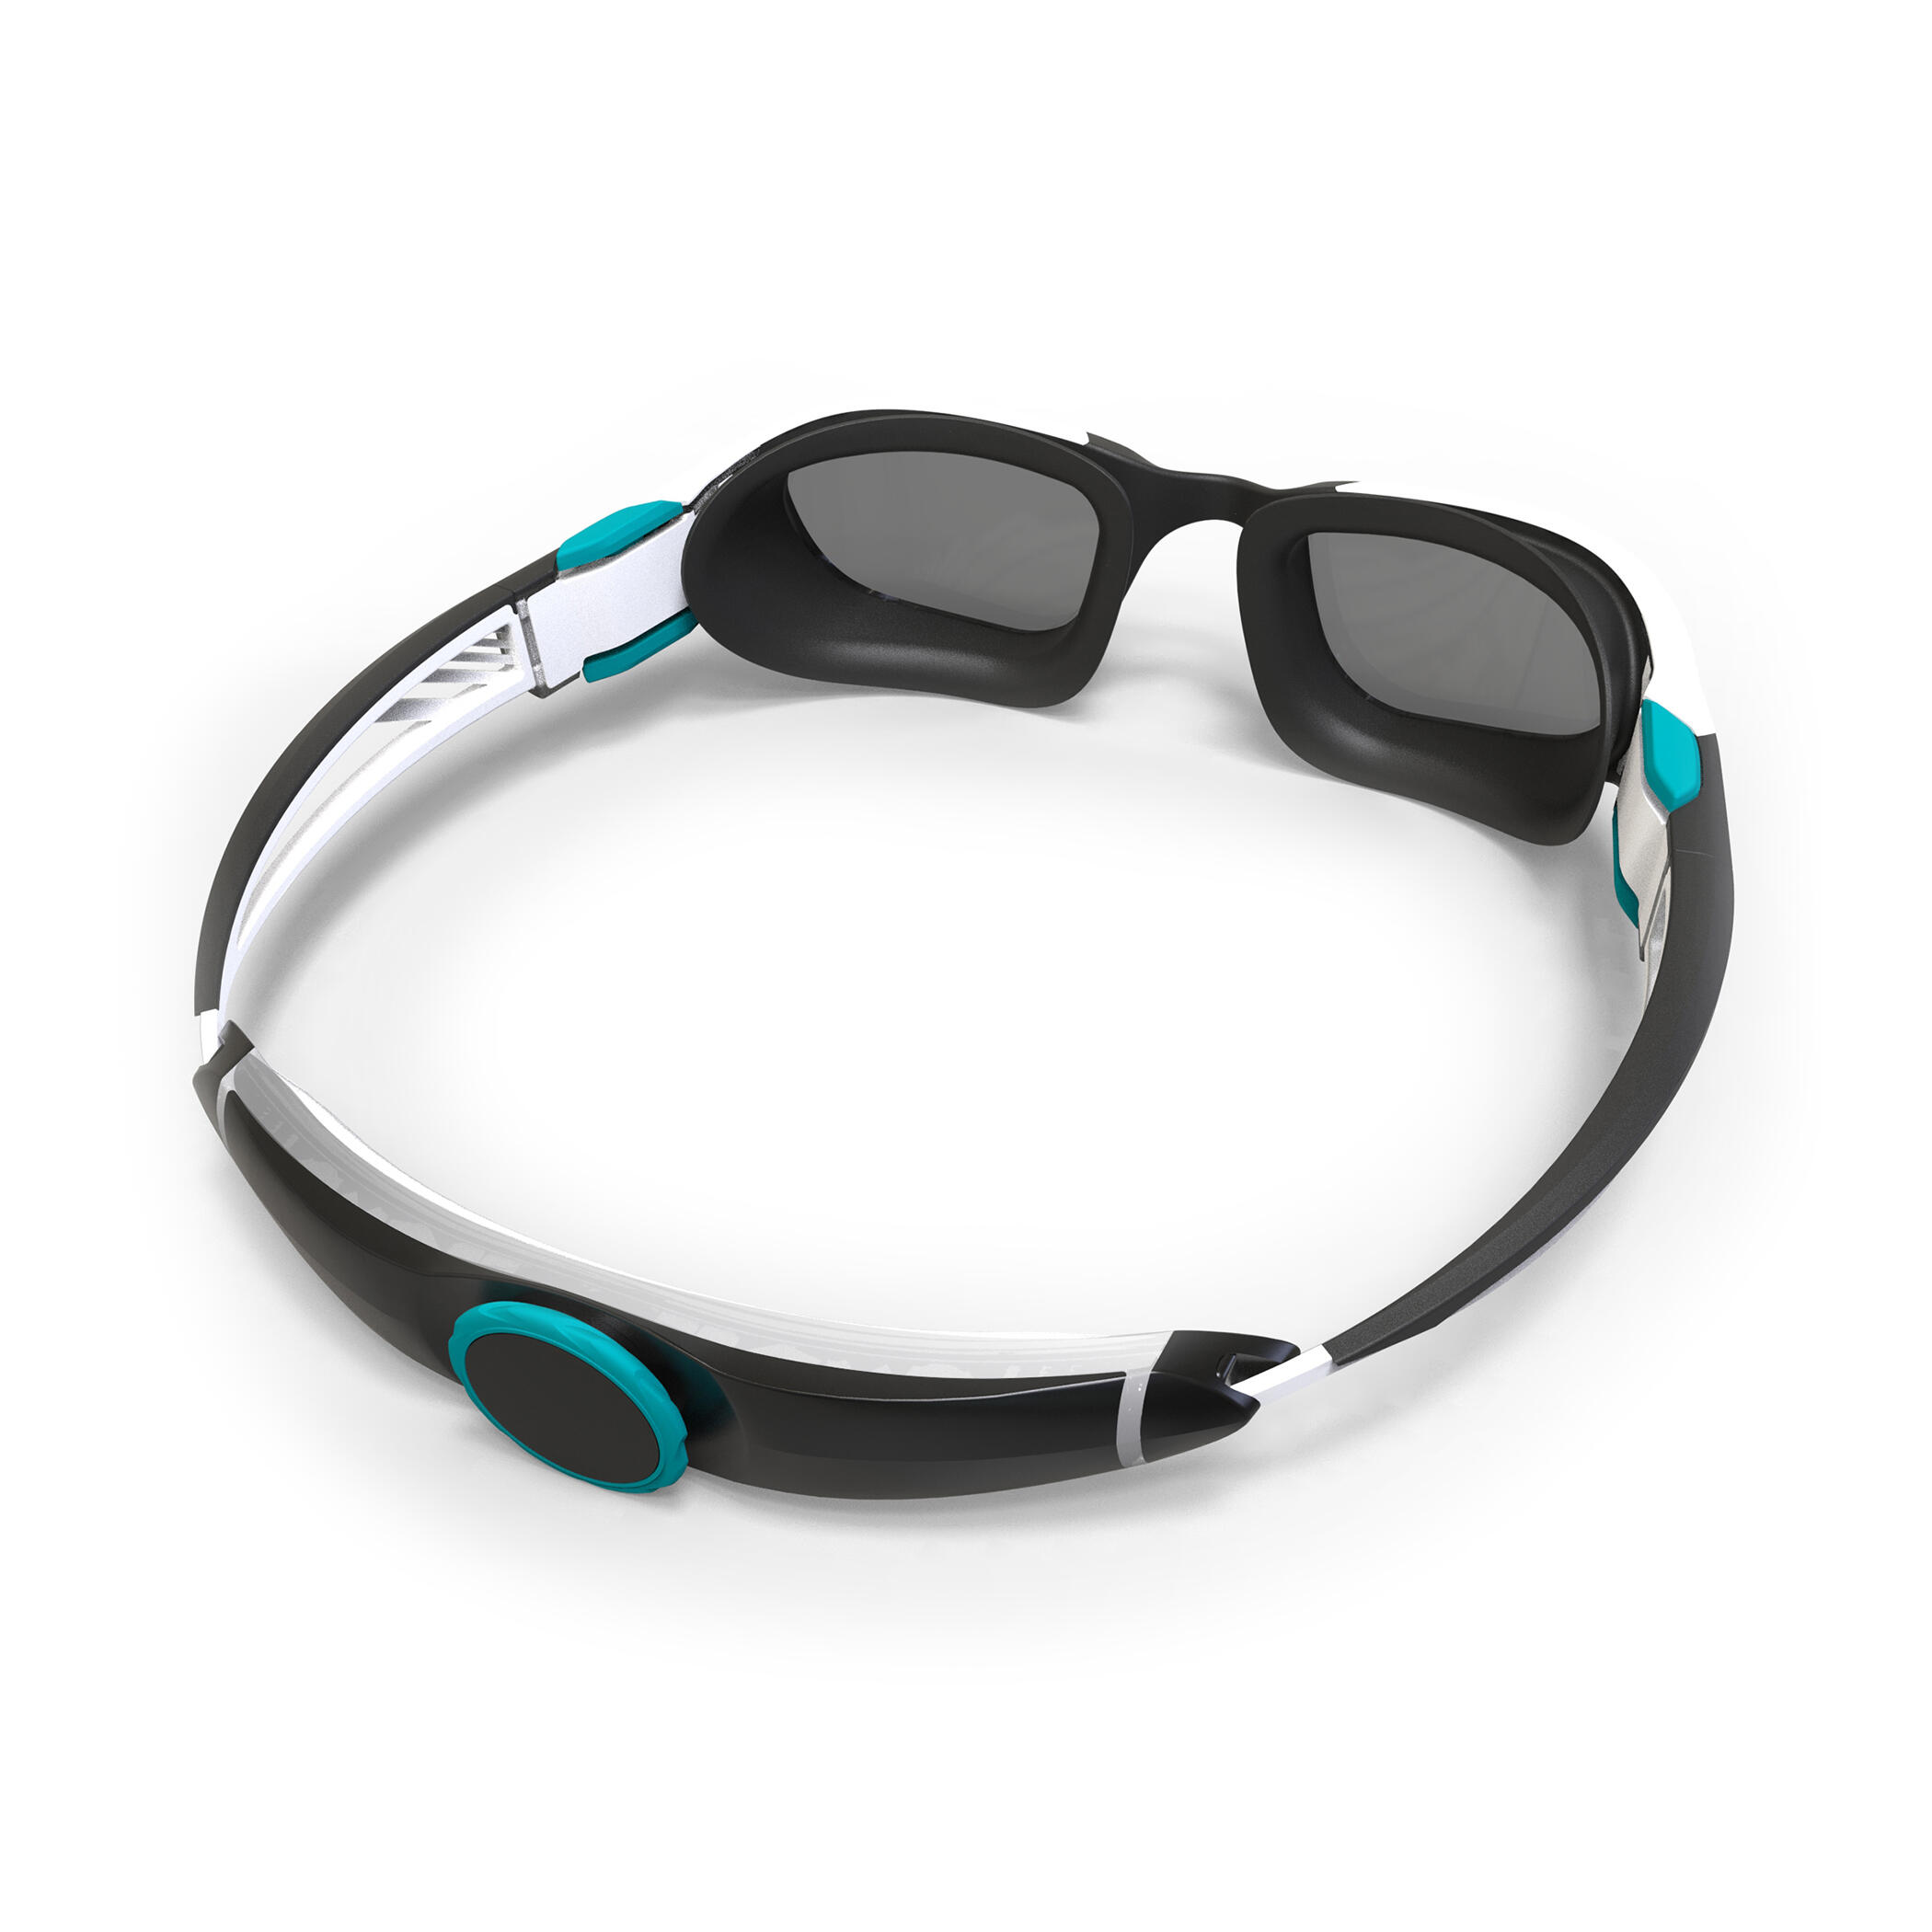 Swimming goggles - TURN Size S - Smoked Lenses - White/Black/Turquoise 5/7